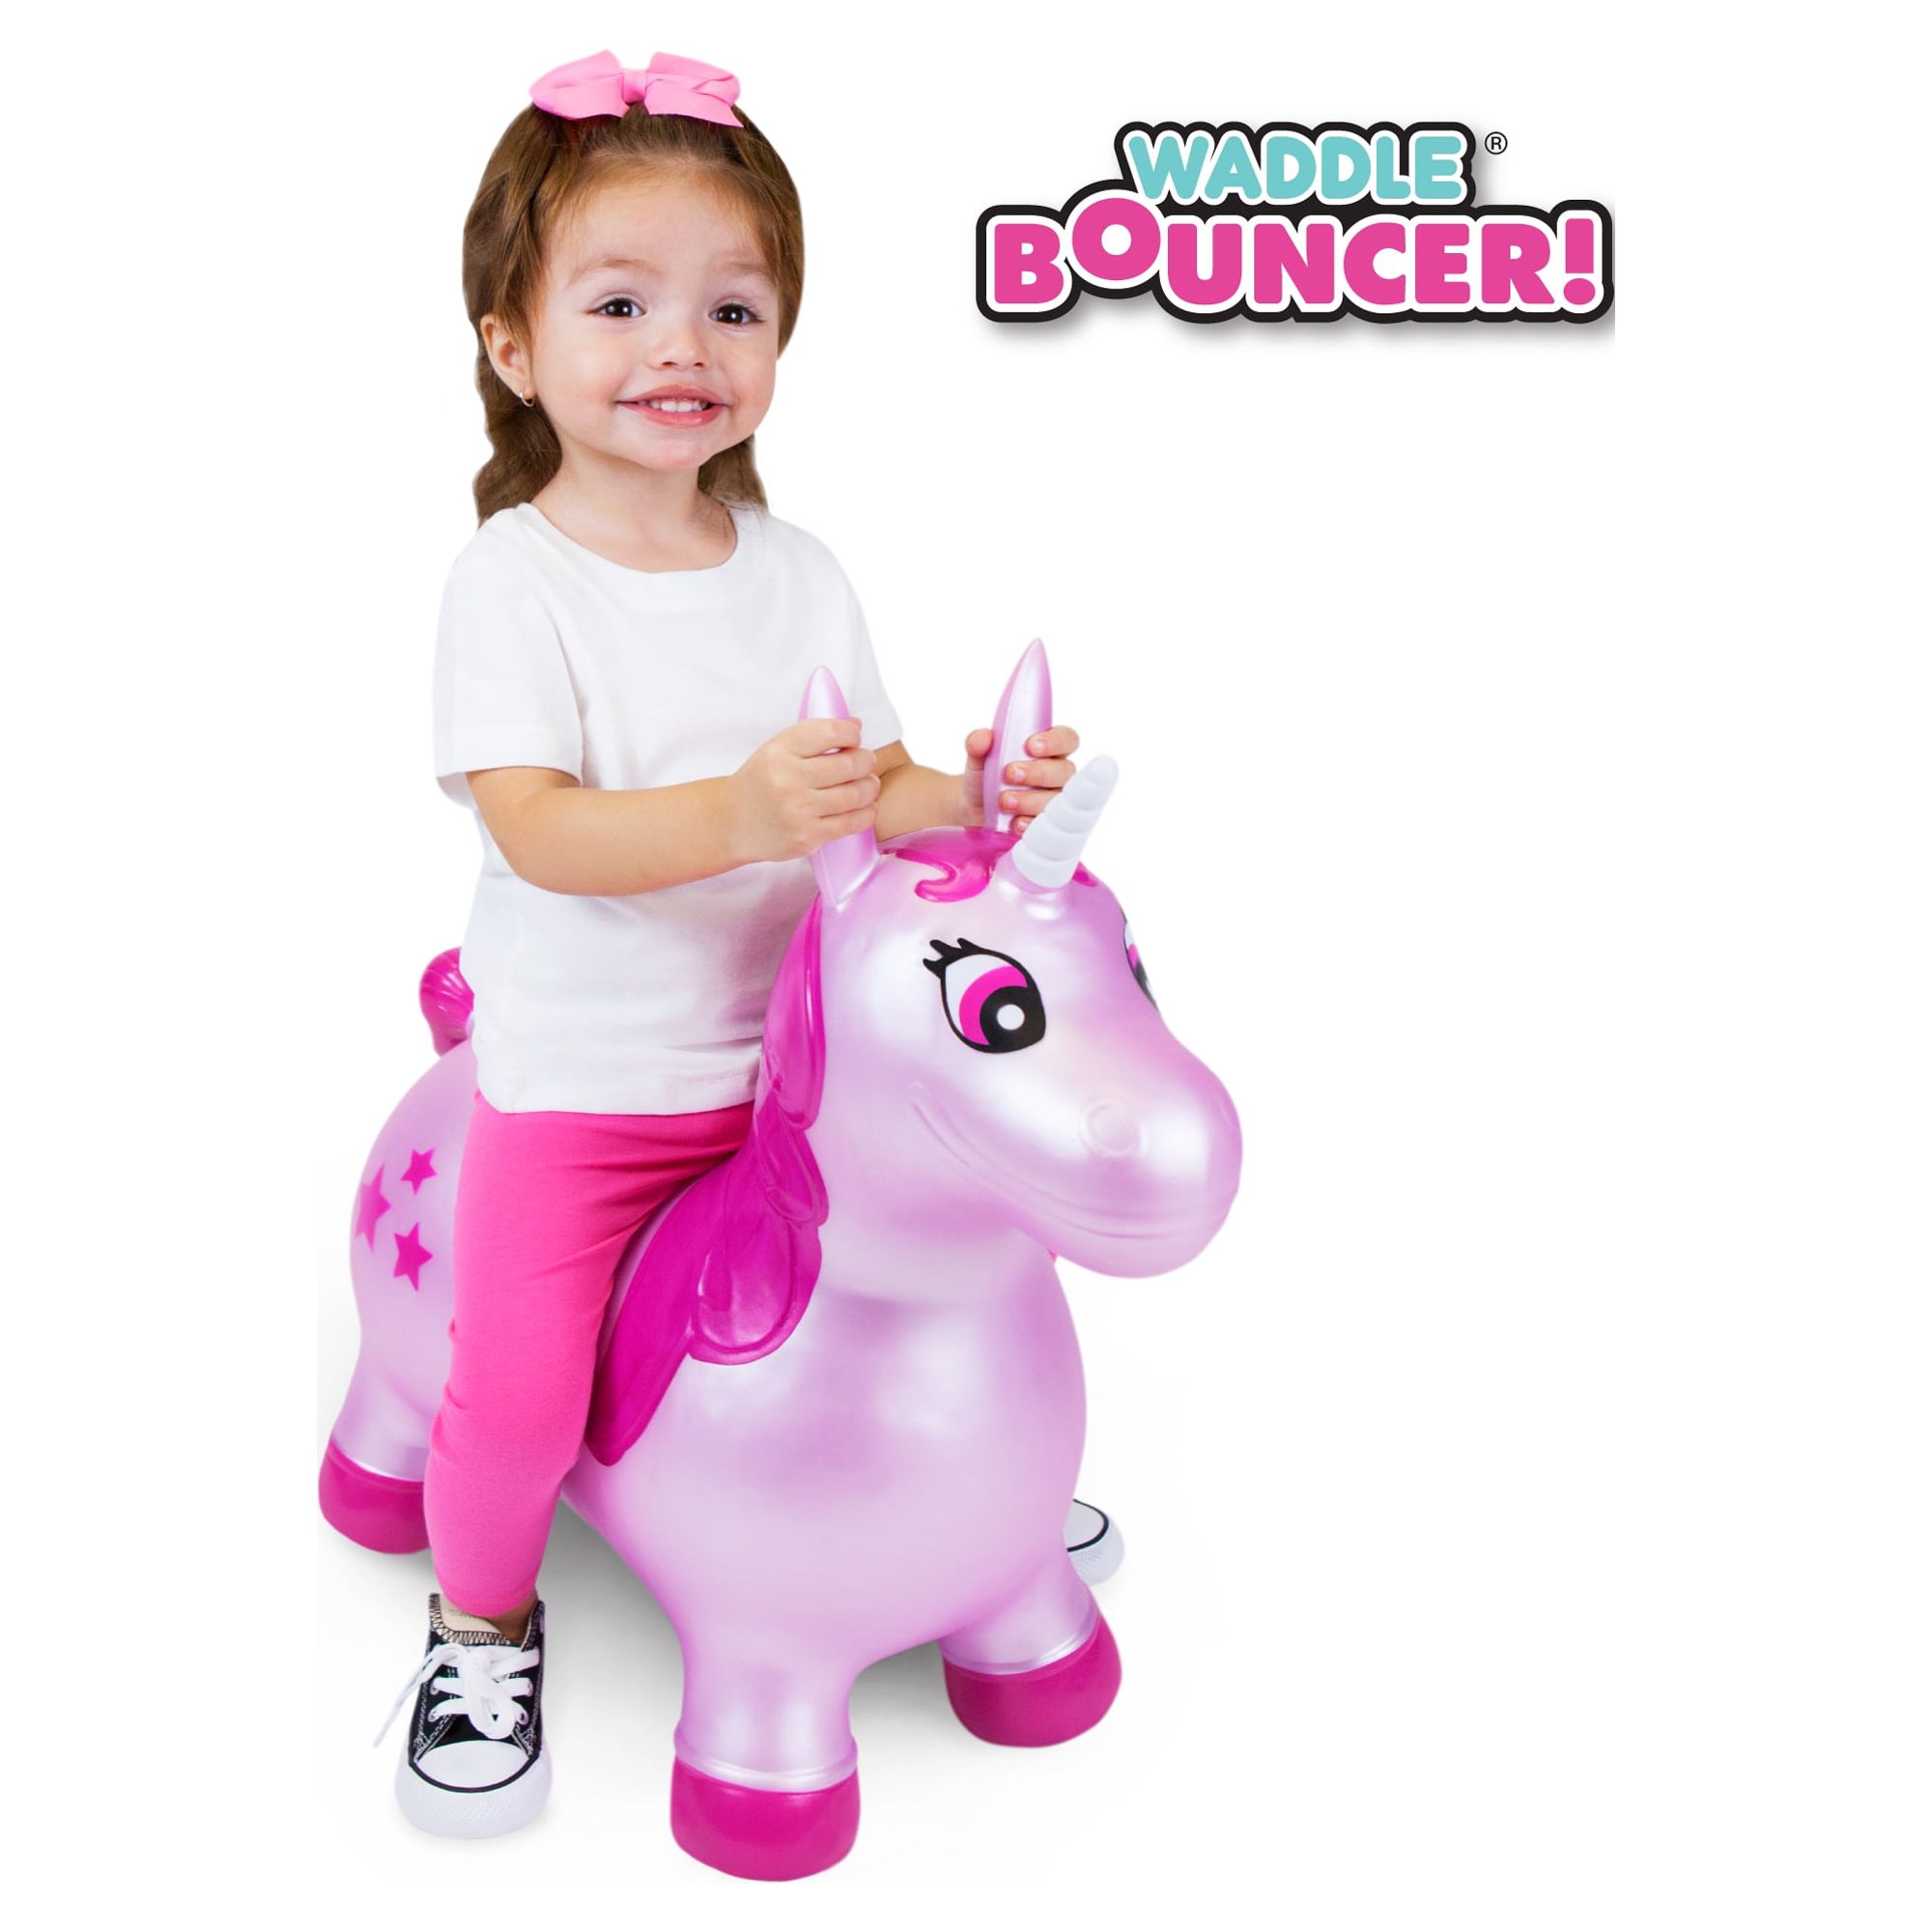 Waddle Pink Unicorn Inflatable Bouncer Ride on - image 4 of 7